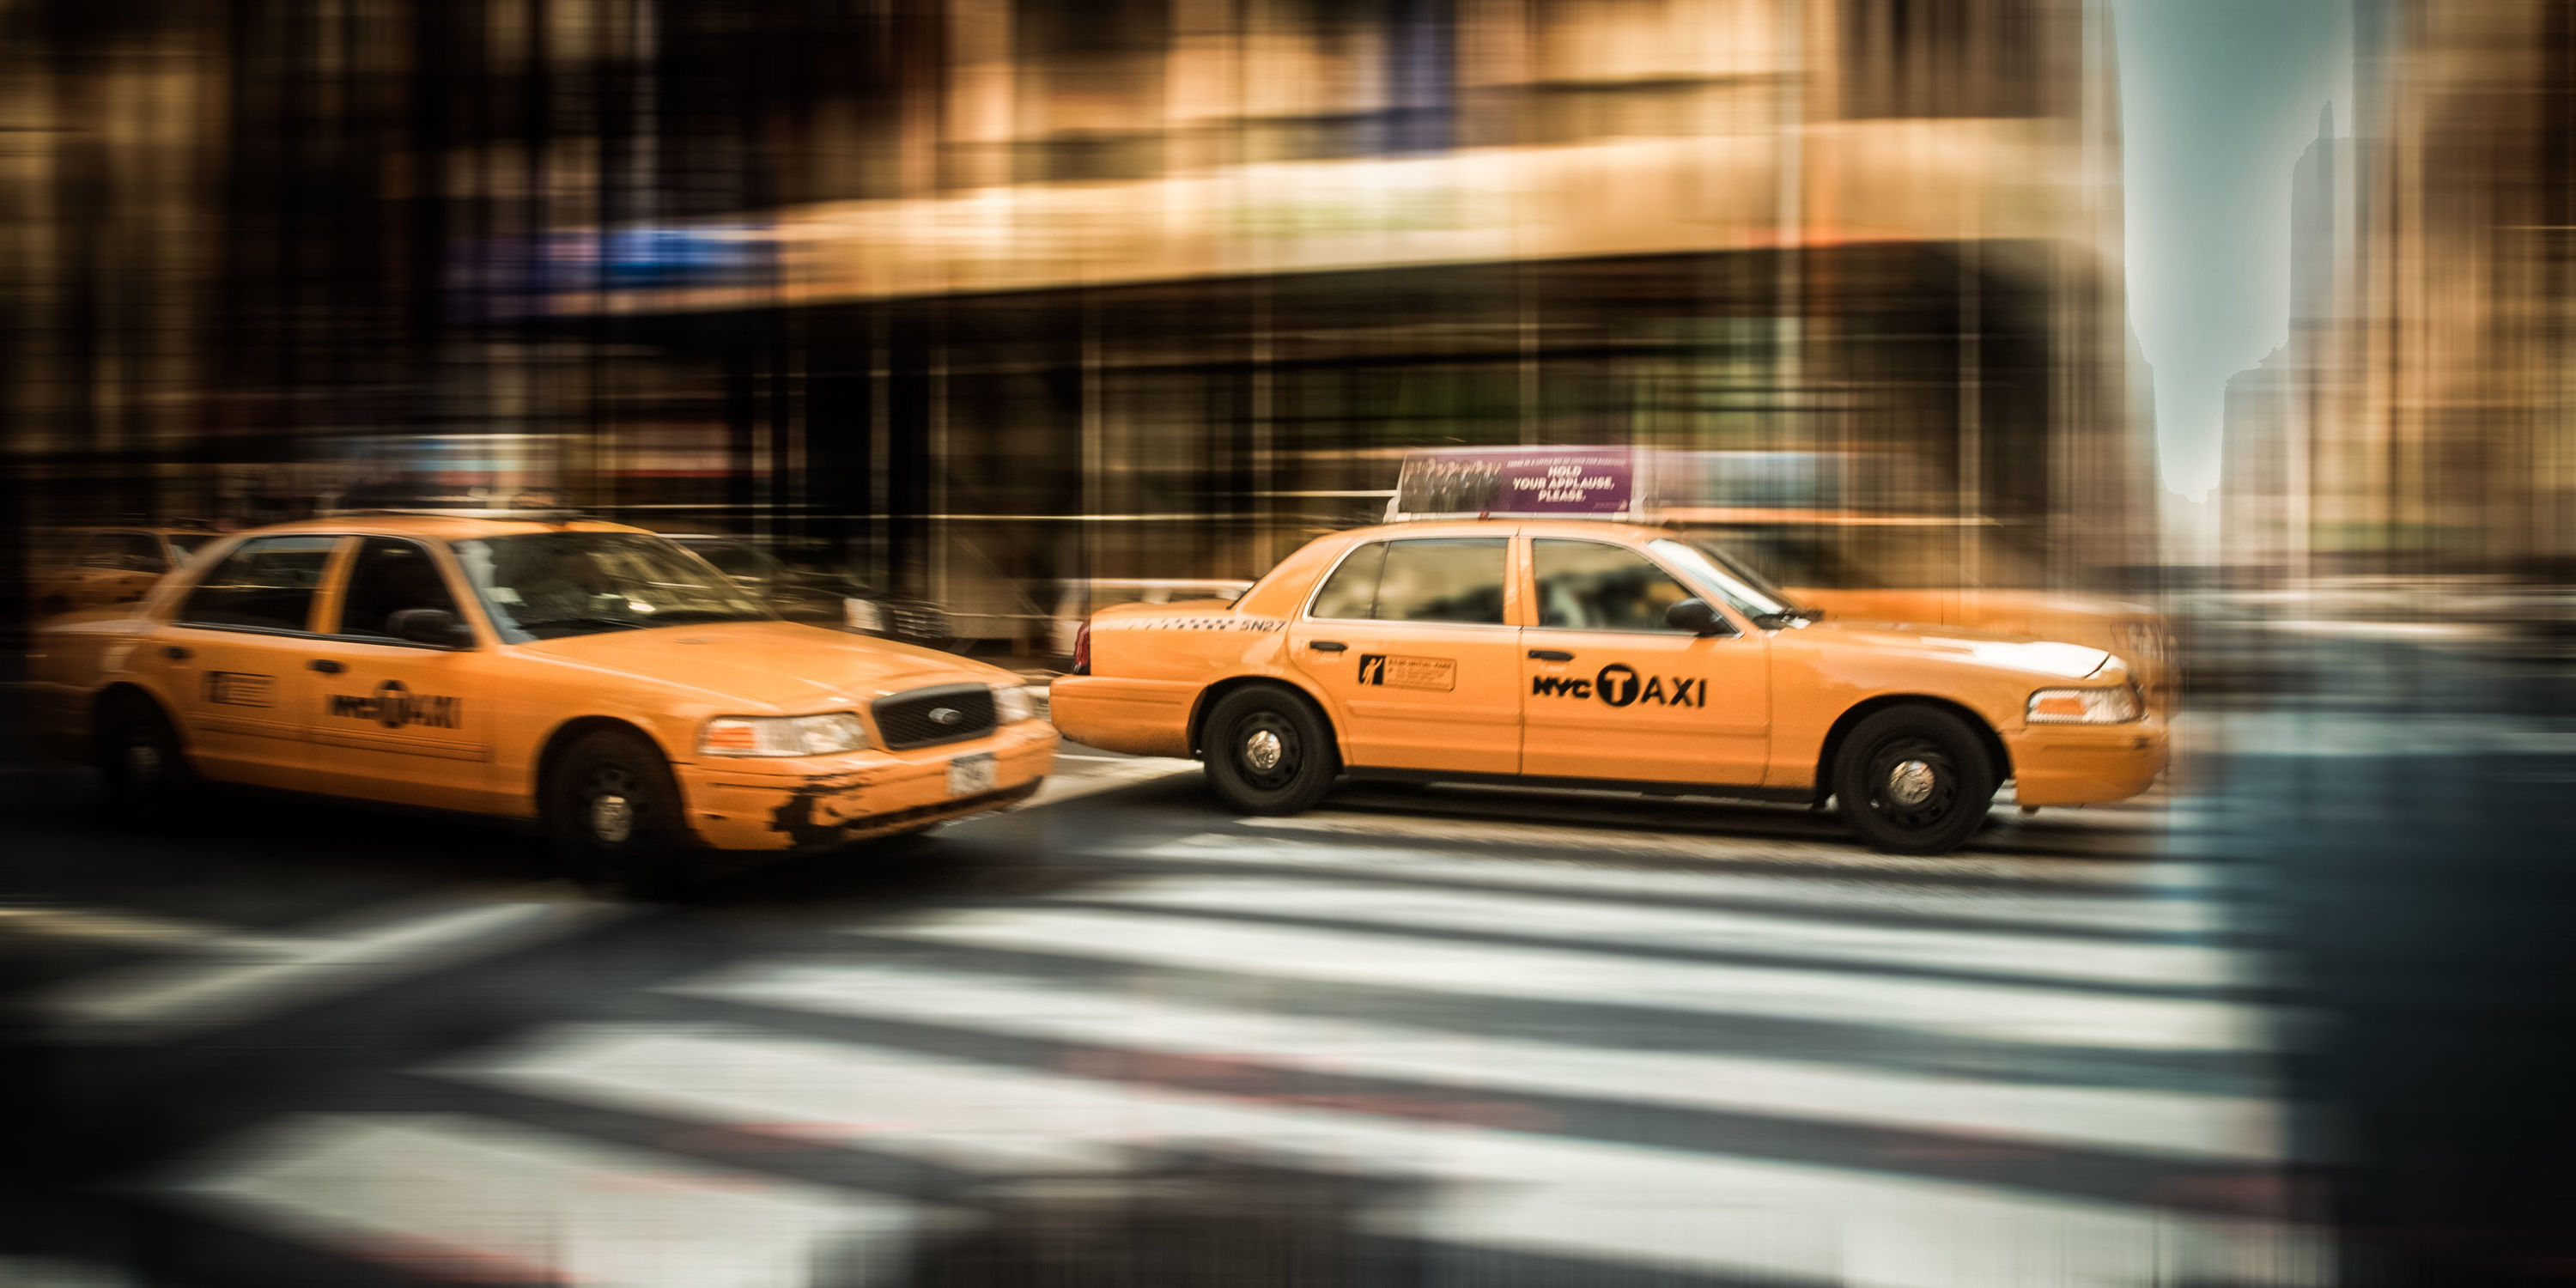 Bild mit Autos, Stadt, New York, USA, Auto, street, Manhattan, Yellow cab, taxi, Taxis, New York City, NYC, Gelbe Taxis, car, cars, cab, gelbes taxi